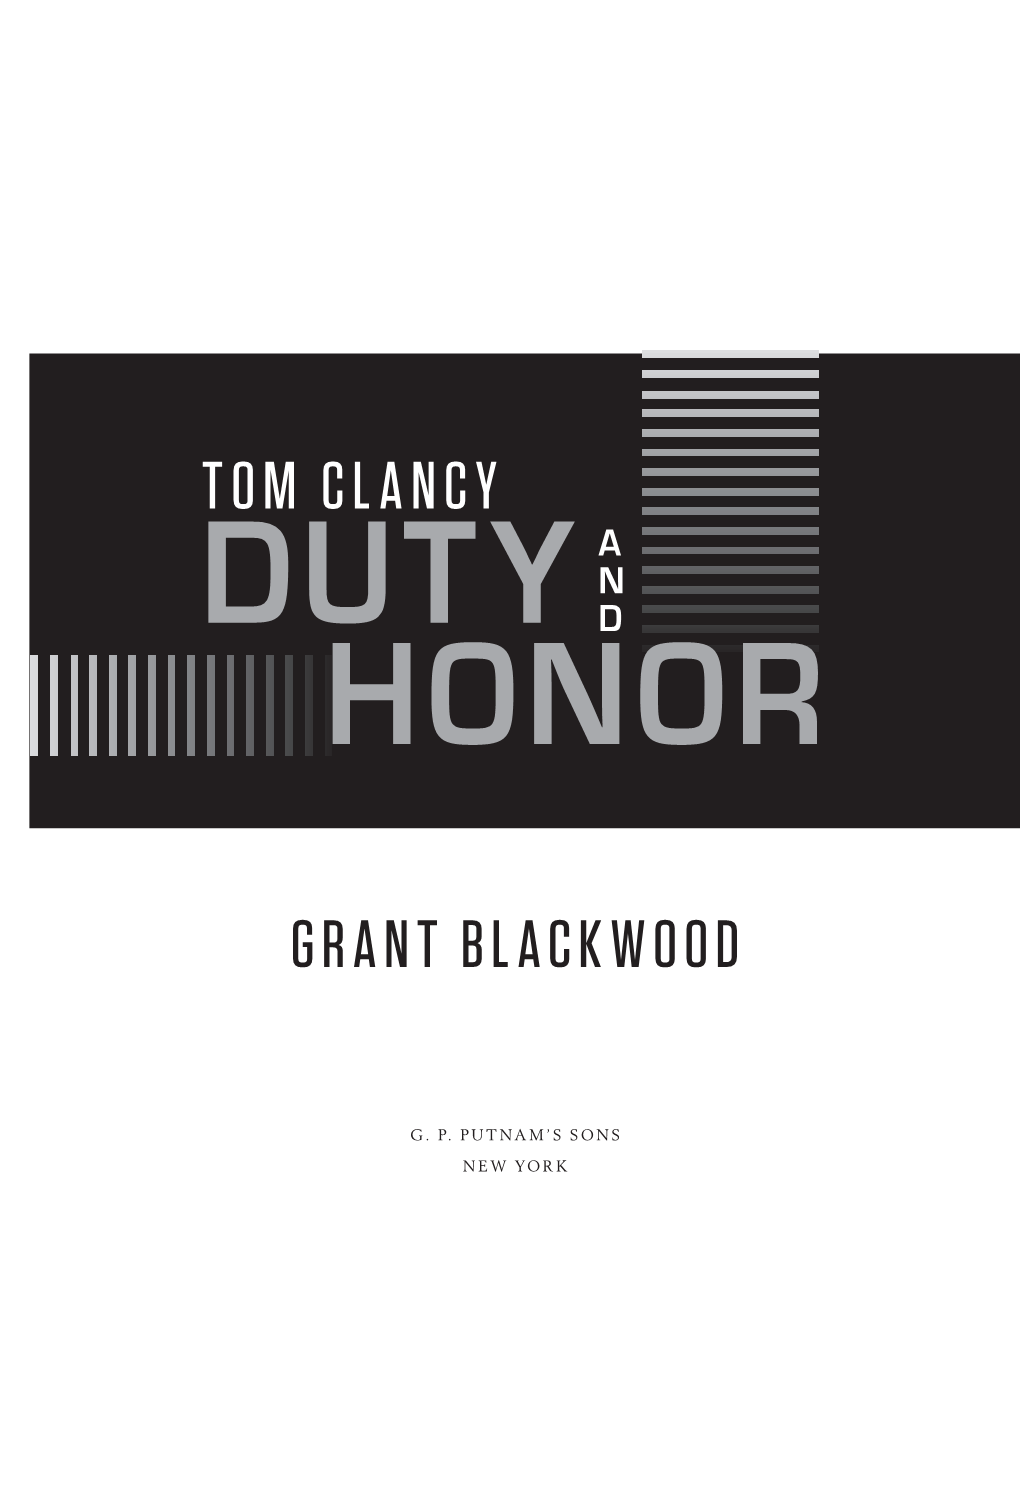 Tom Clancy Grant Blackwood